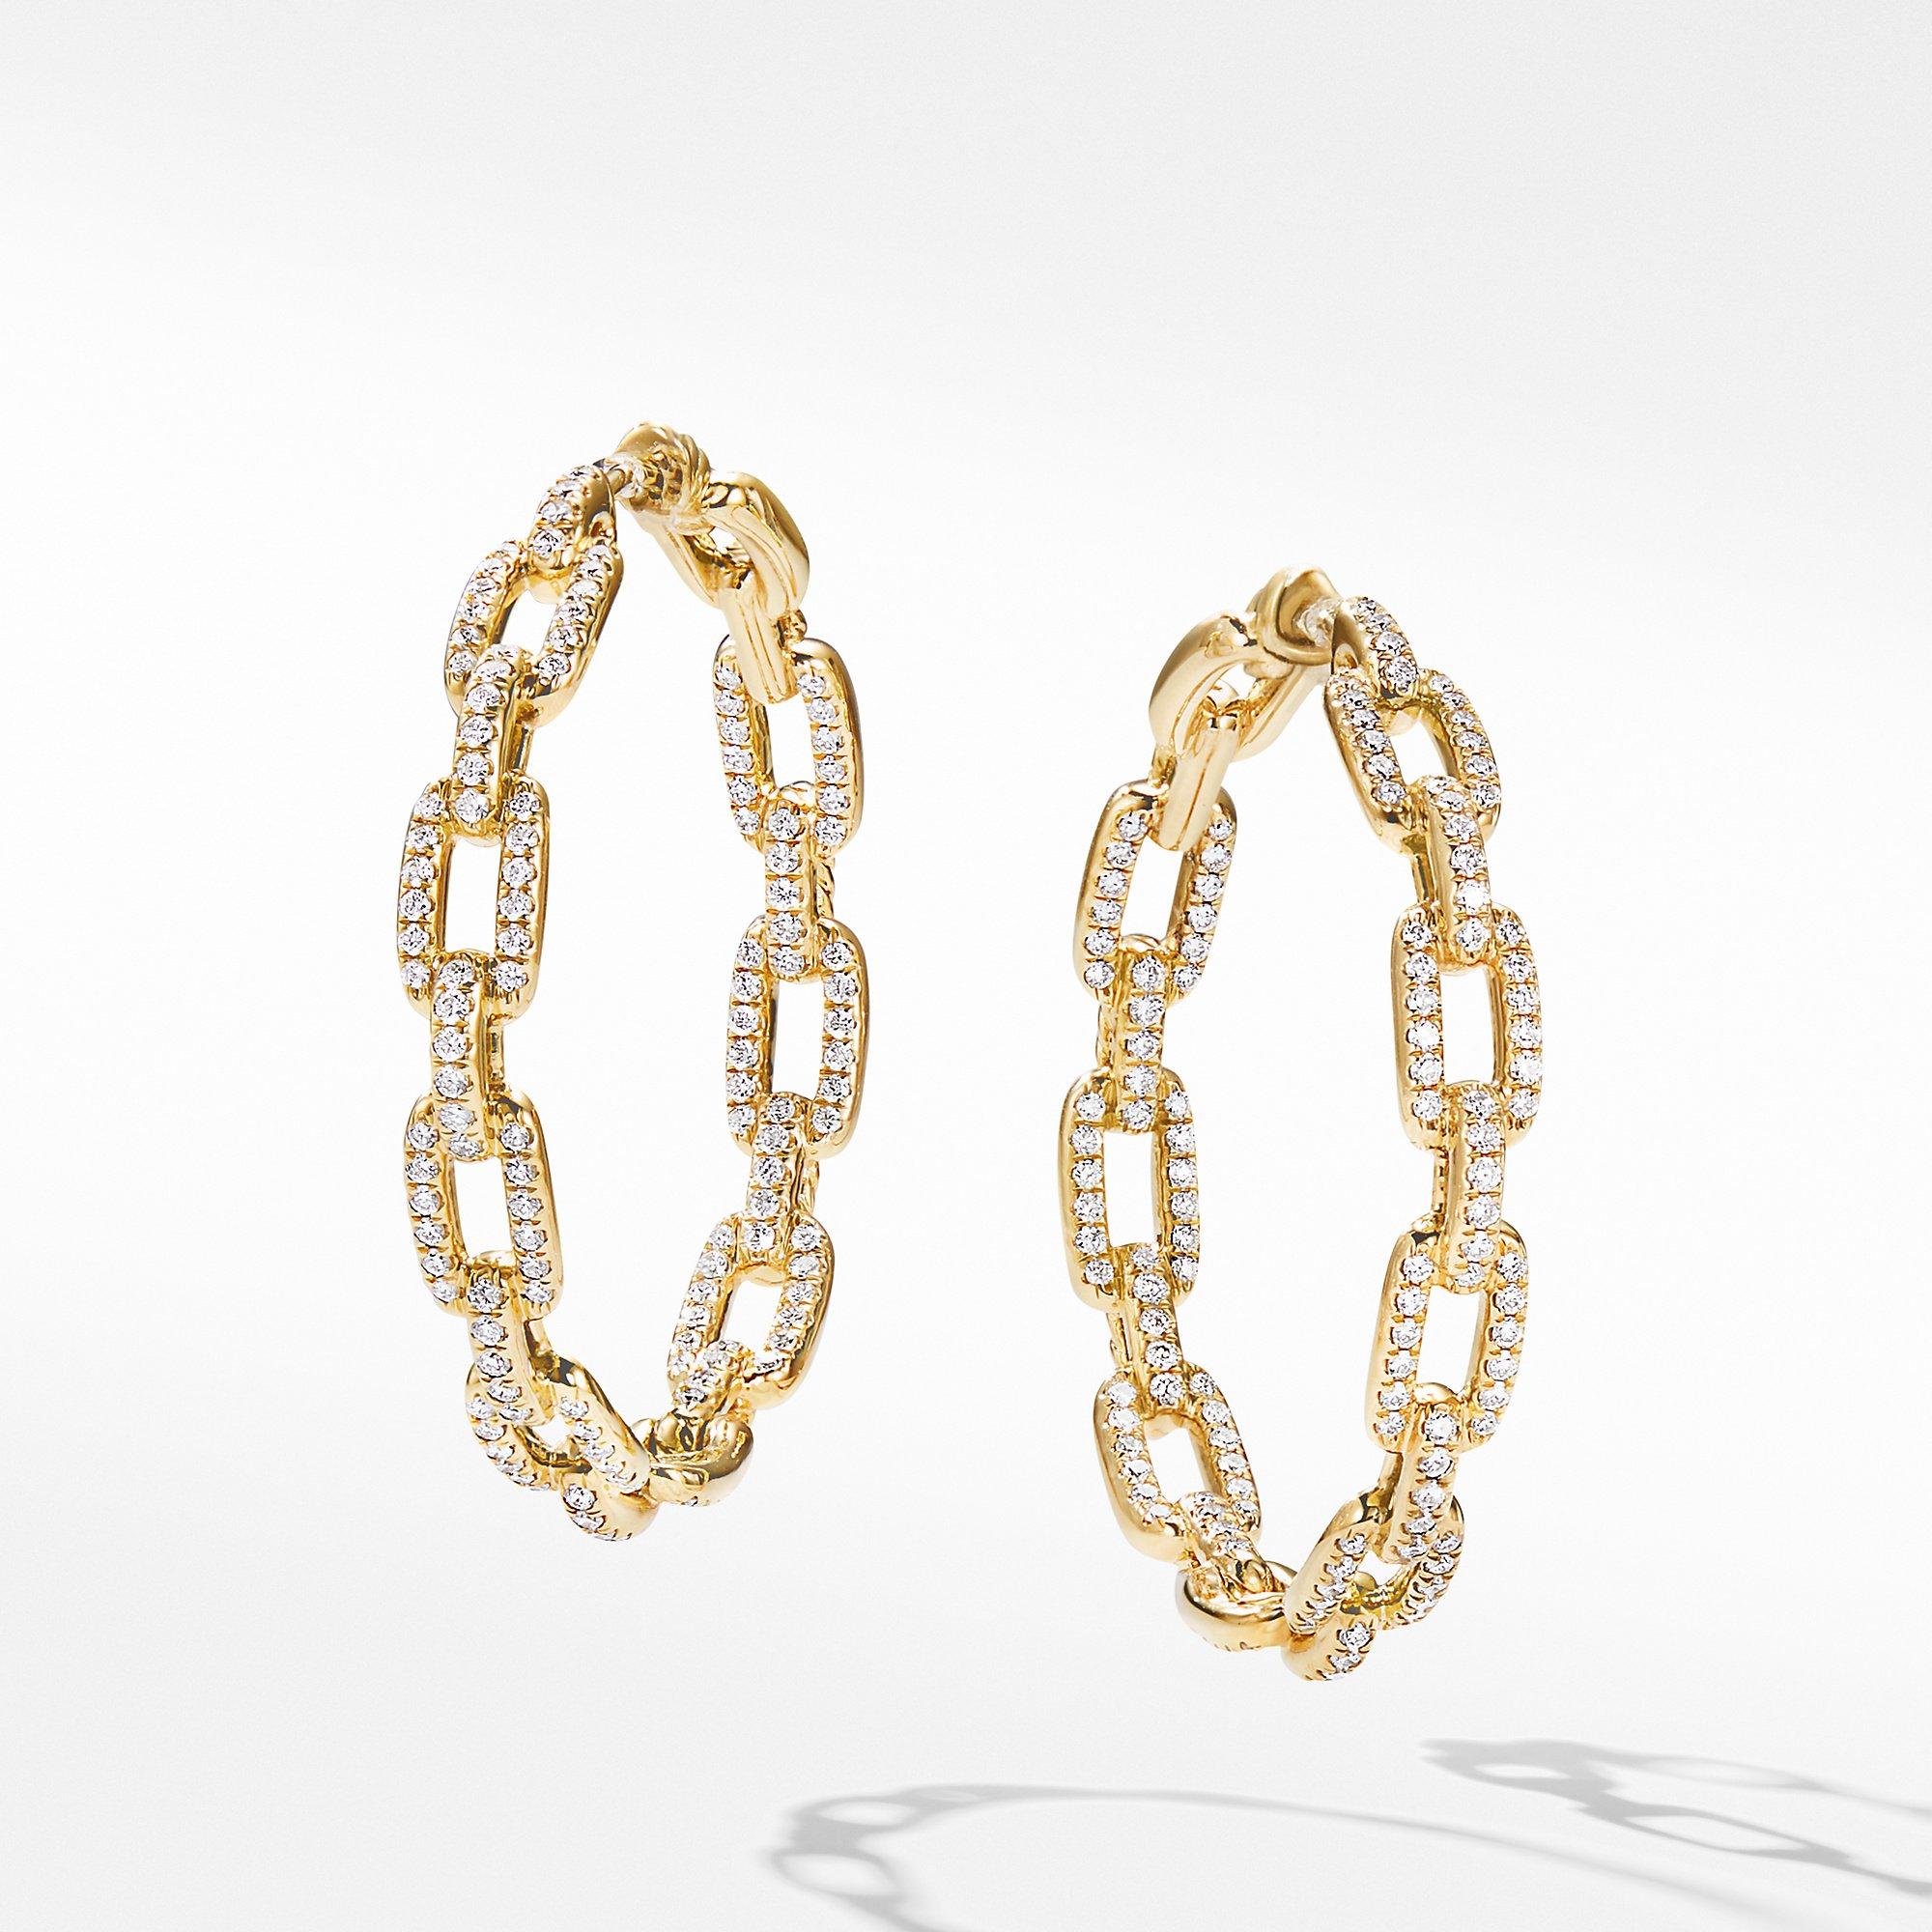 David Yurman Stax Chain Link Hoop Earrings in 18k Yellow Gold with Diamonds